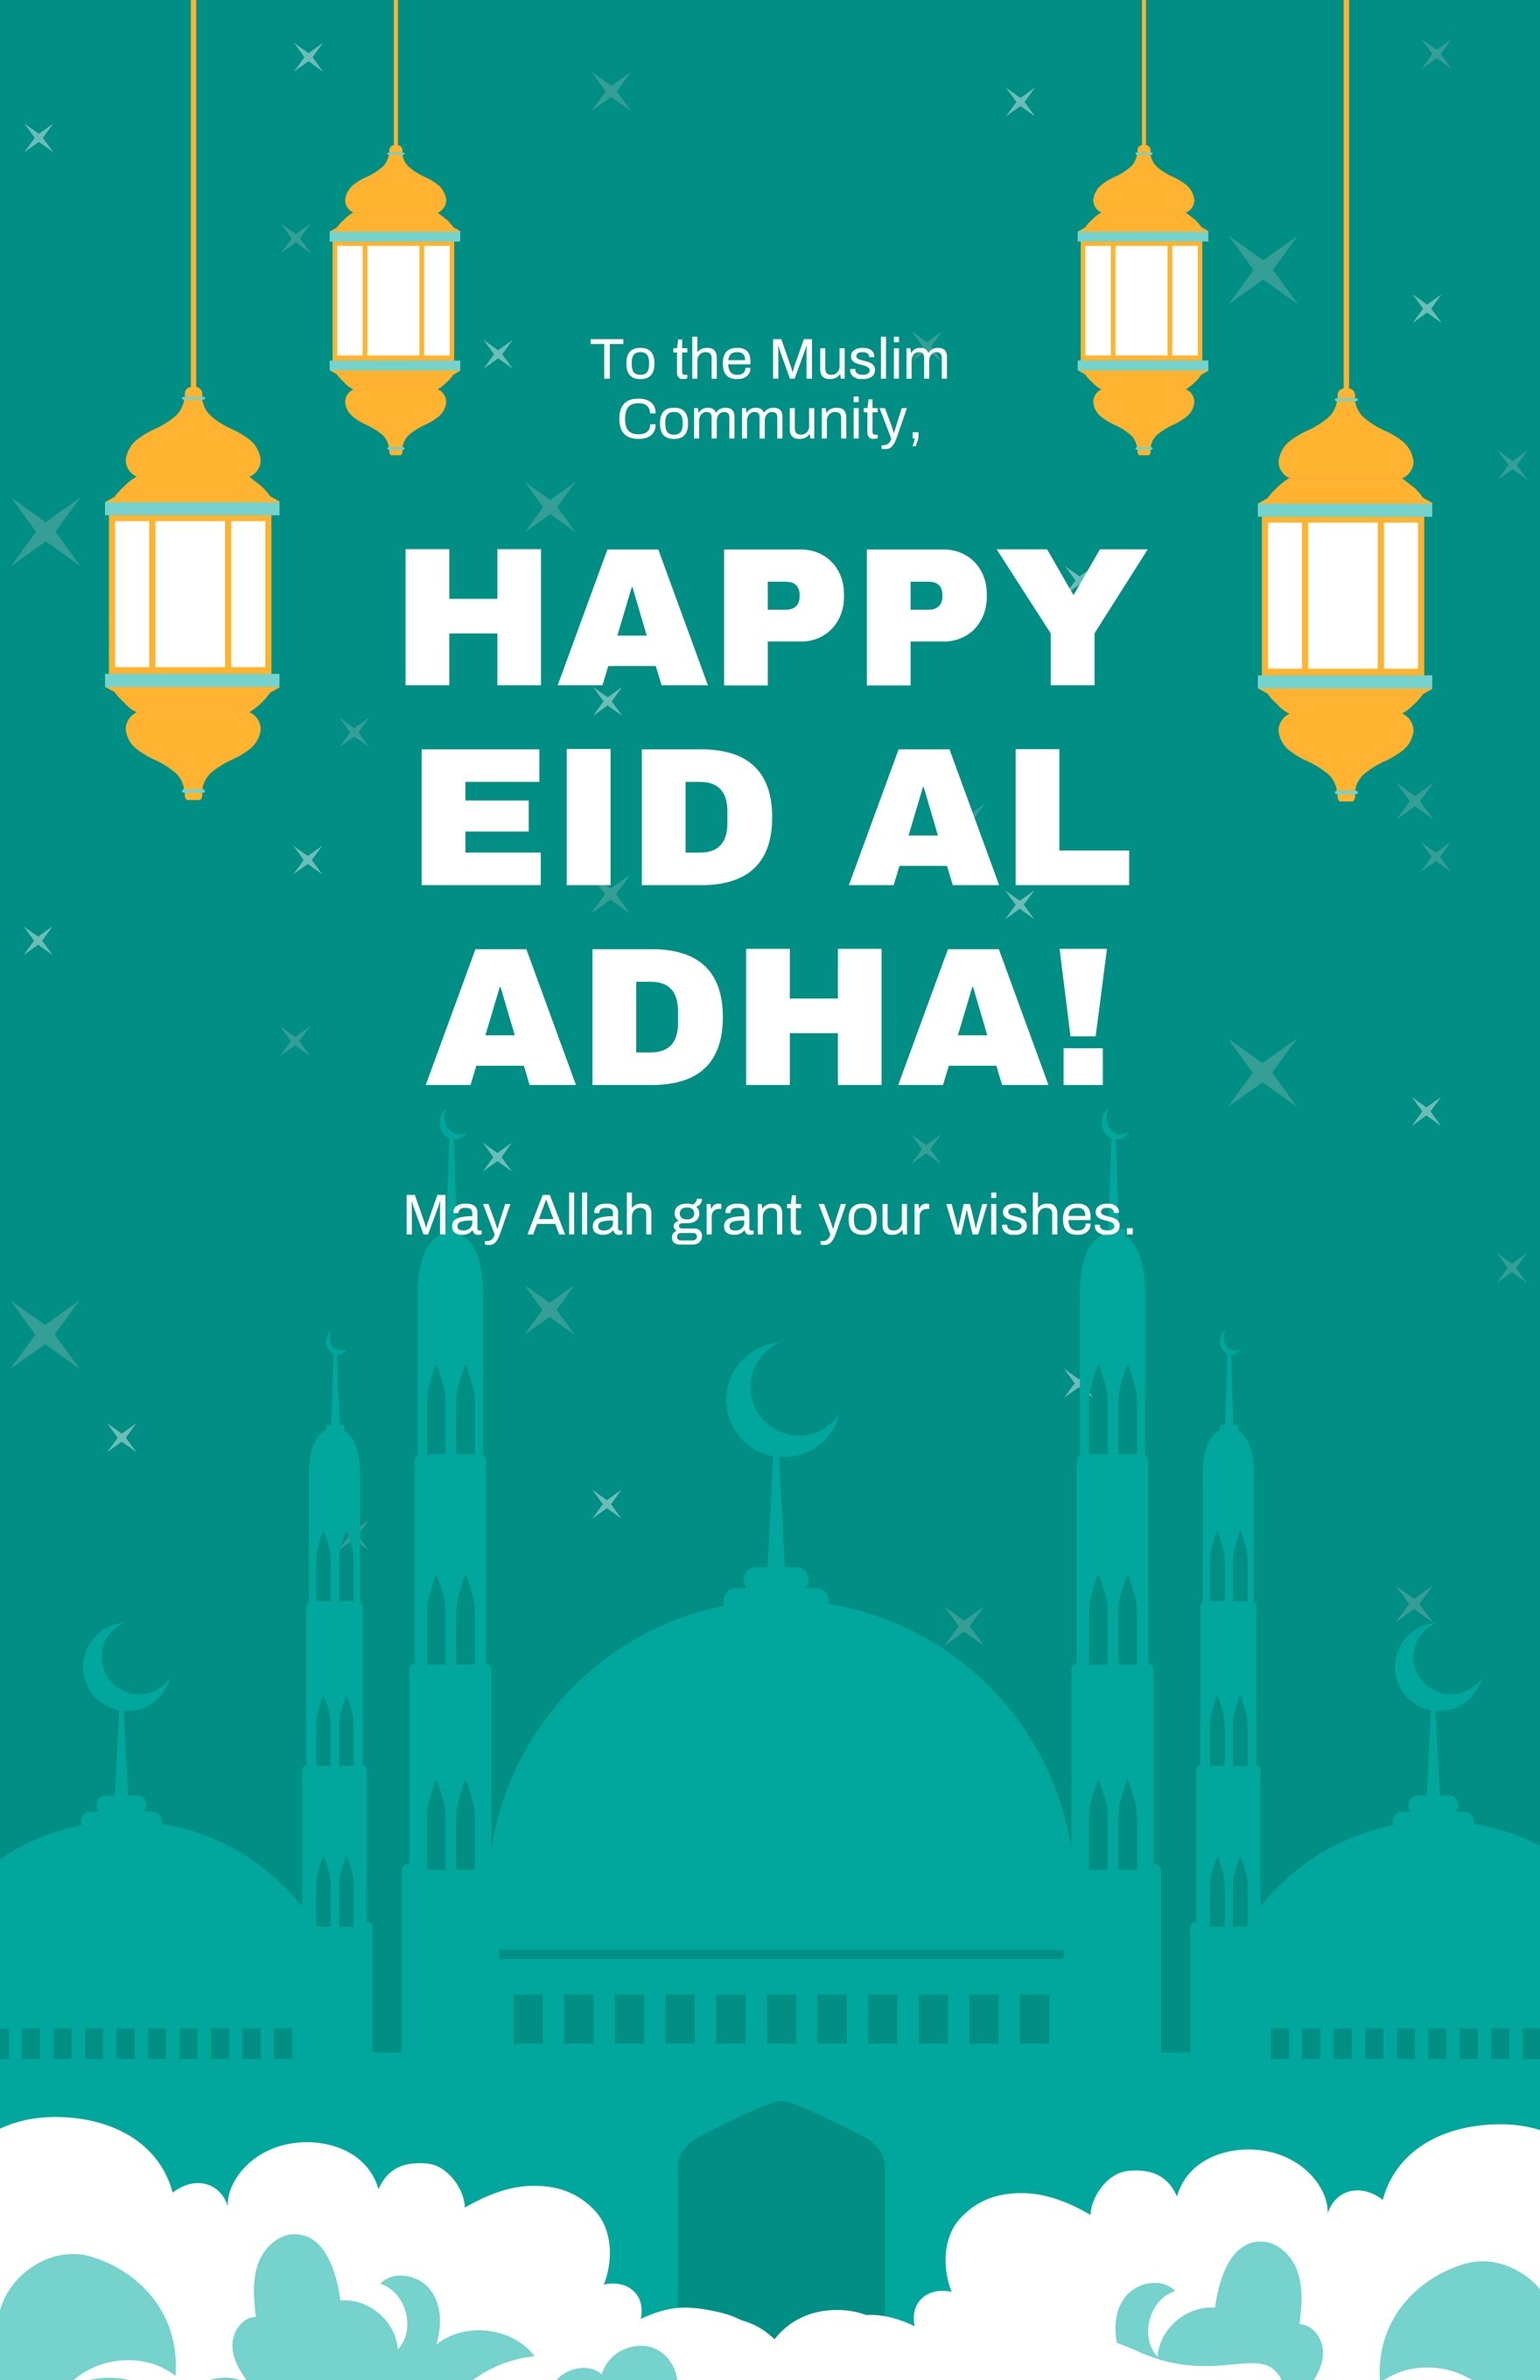 FREE Eid Al Adha Poster Template - Download in Word, Google Docs, PDF ...